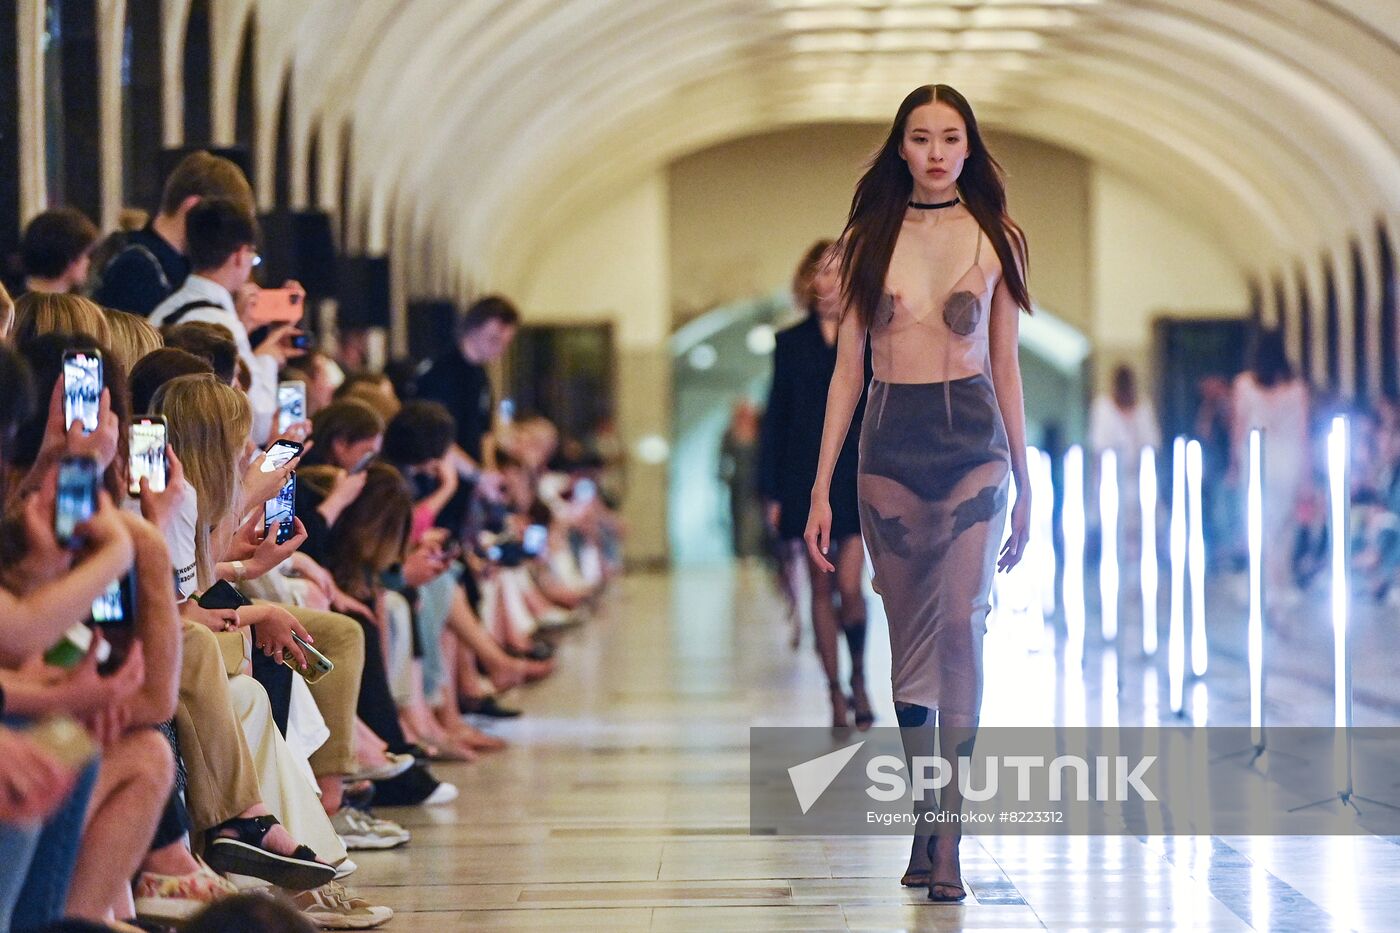 Russia Moscow Fashion Week Metro